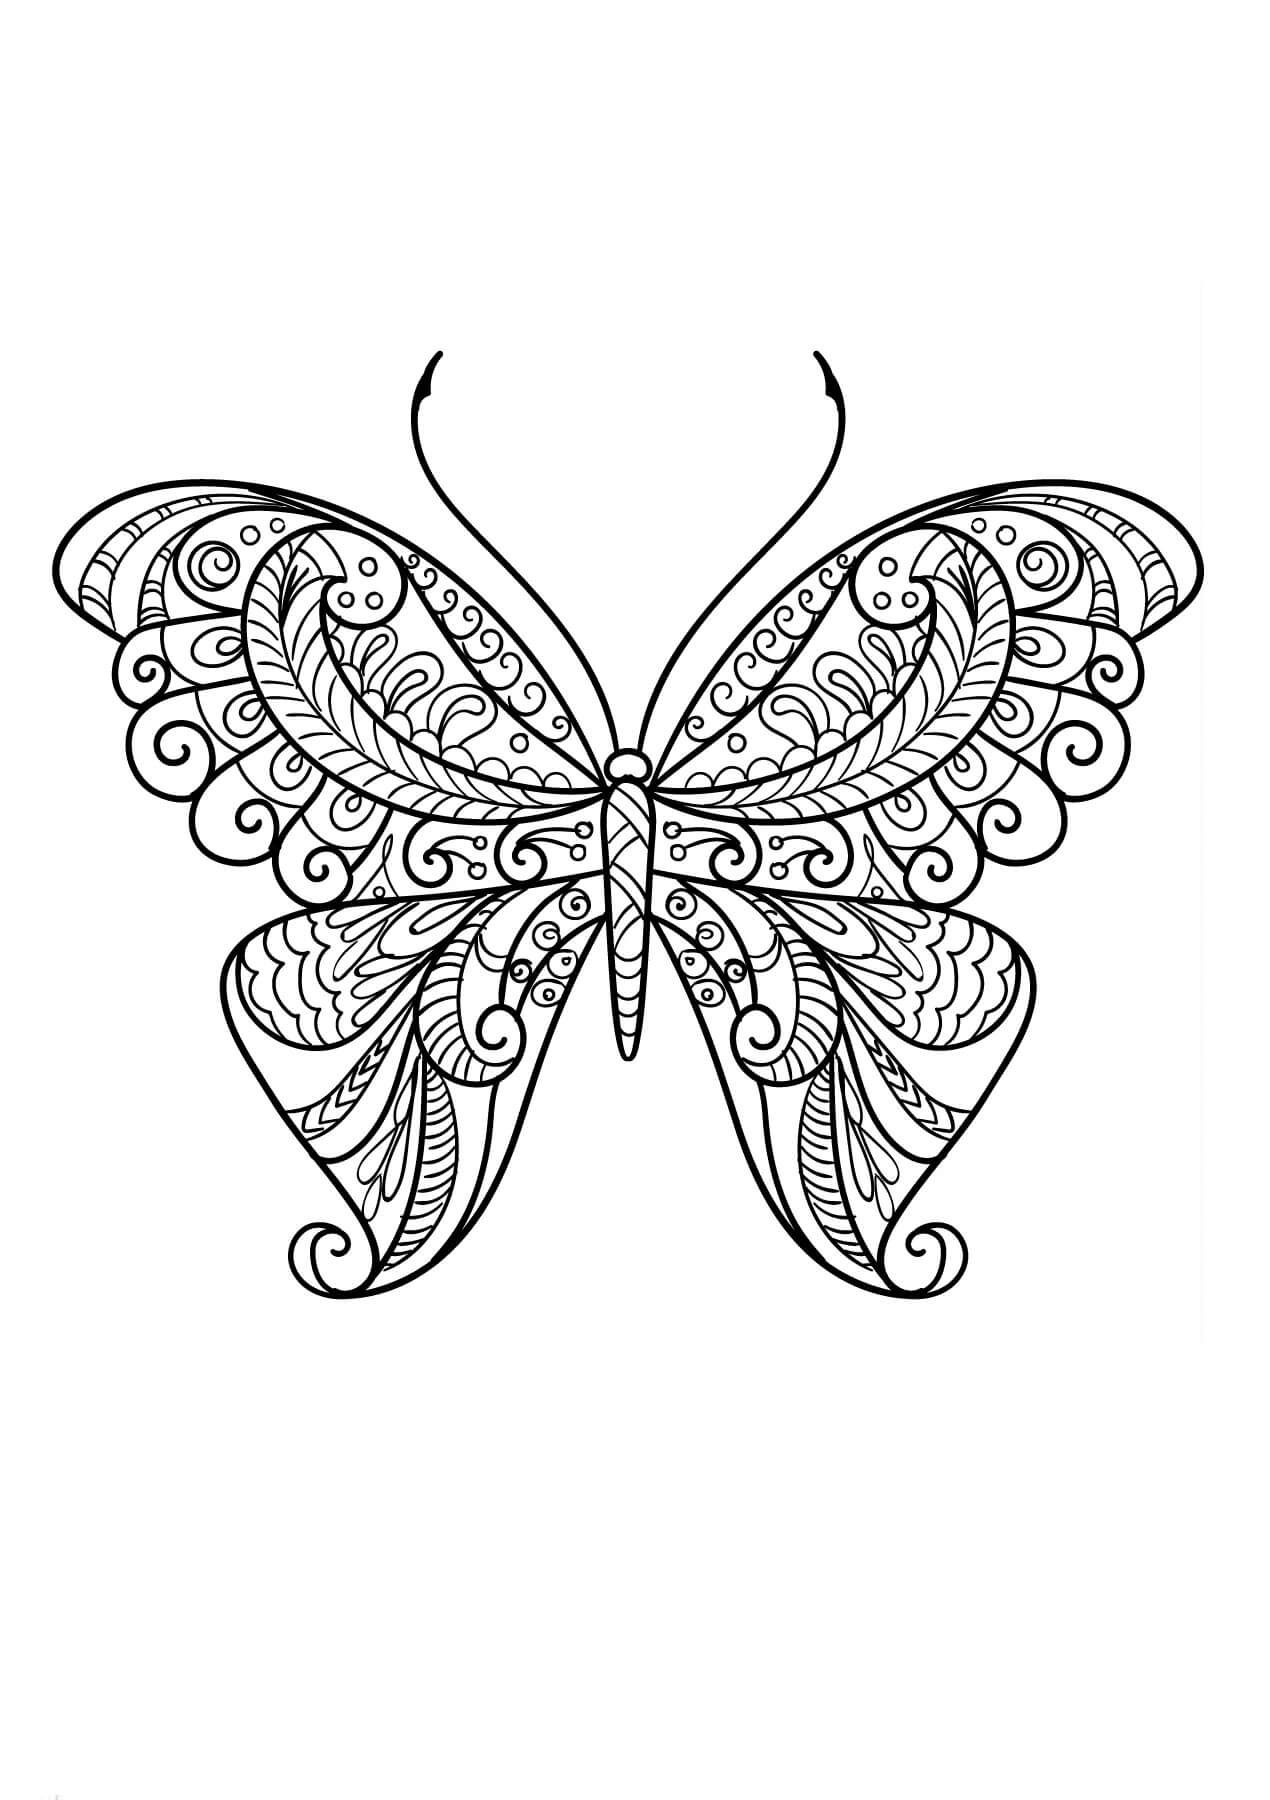 Dibujos de Gran Mandala de Mariposas para colorear